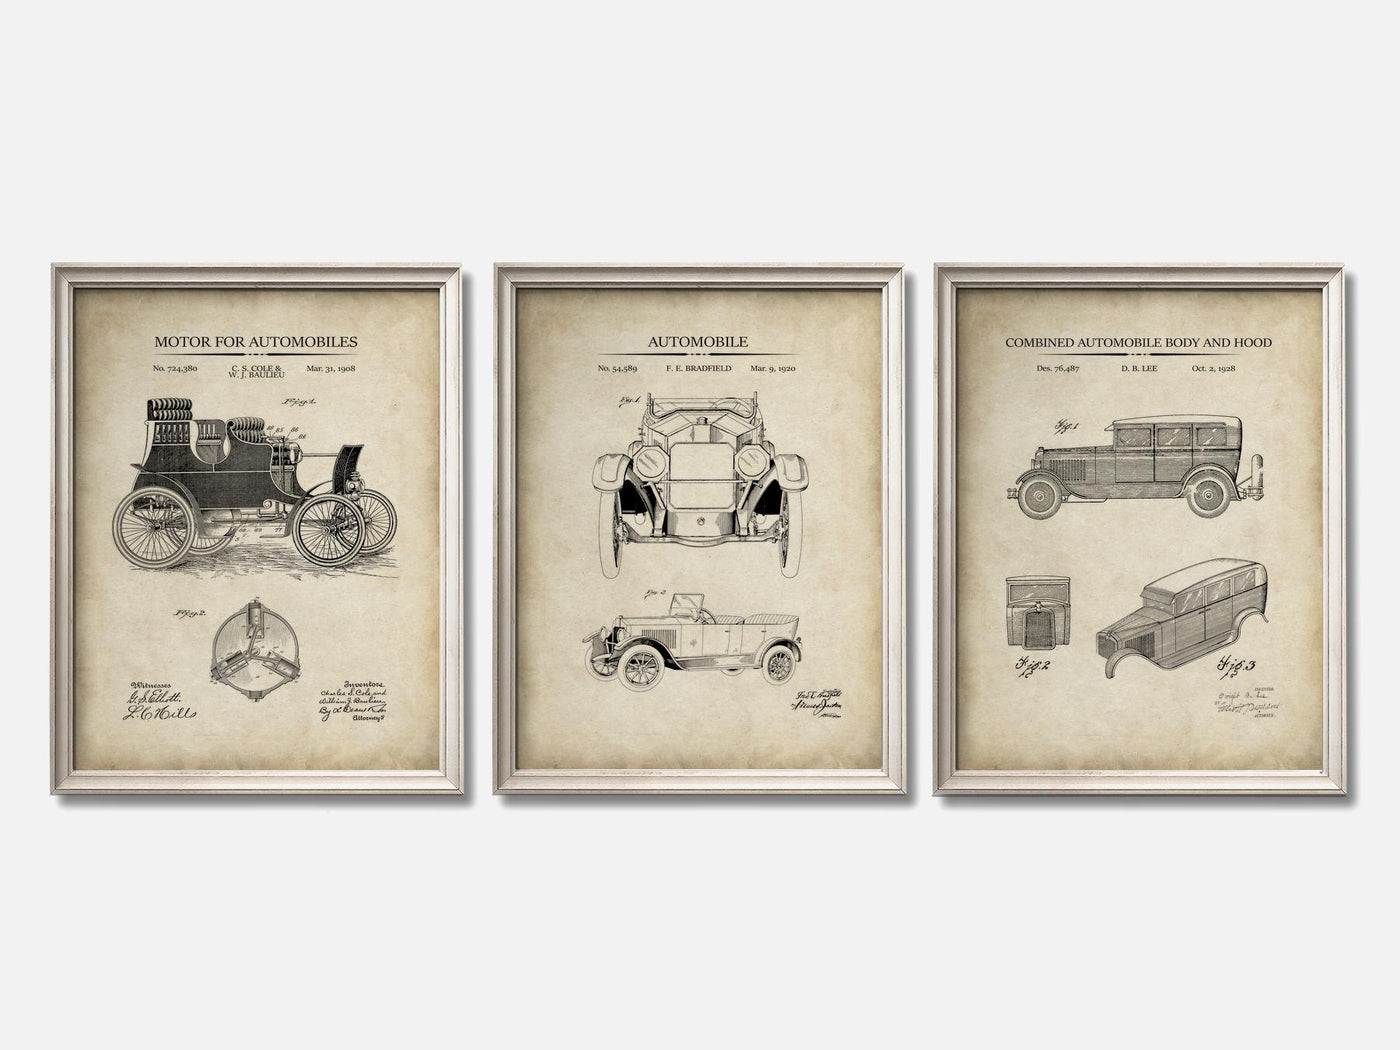 Early 20th Century Cars - Patent Print Set of 3 mockup - A_t10133-V1-PC_F+O-SS_3-PS_11x14-C_par variant